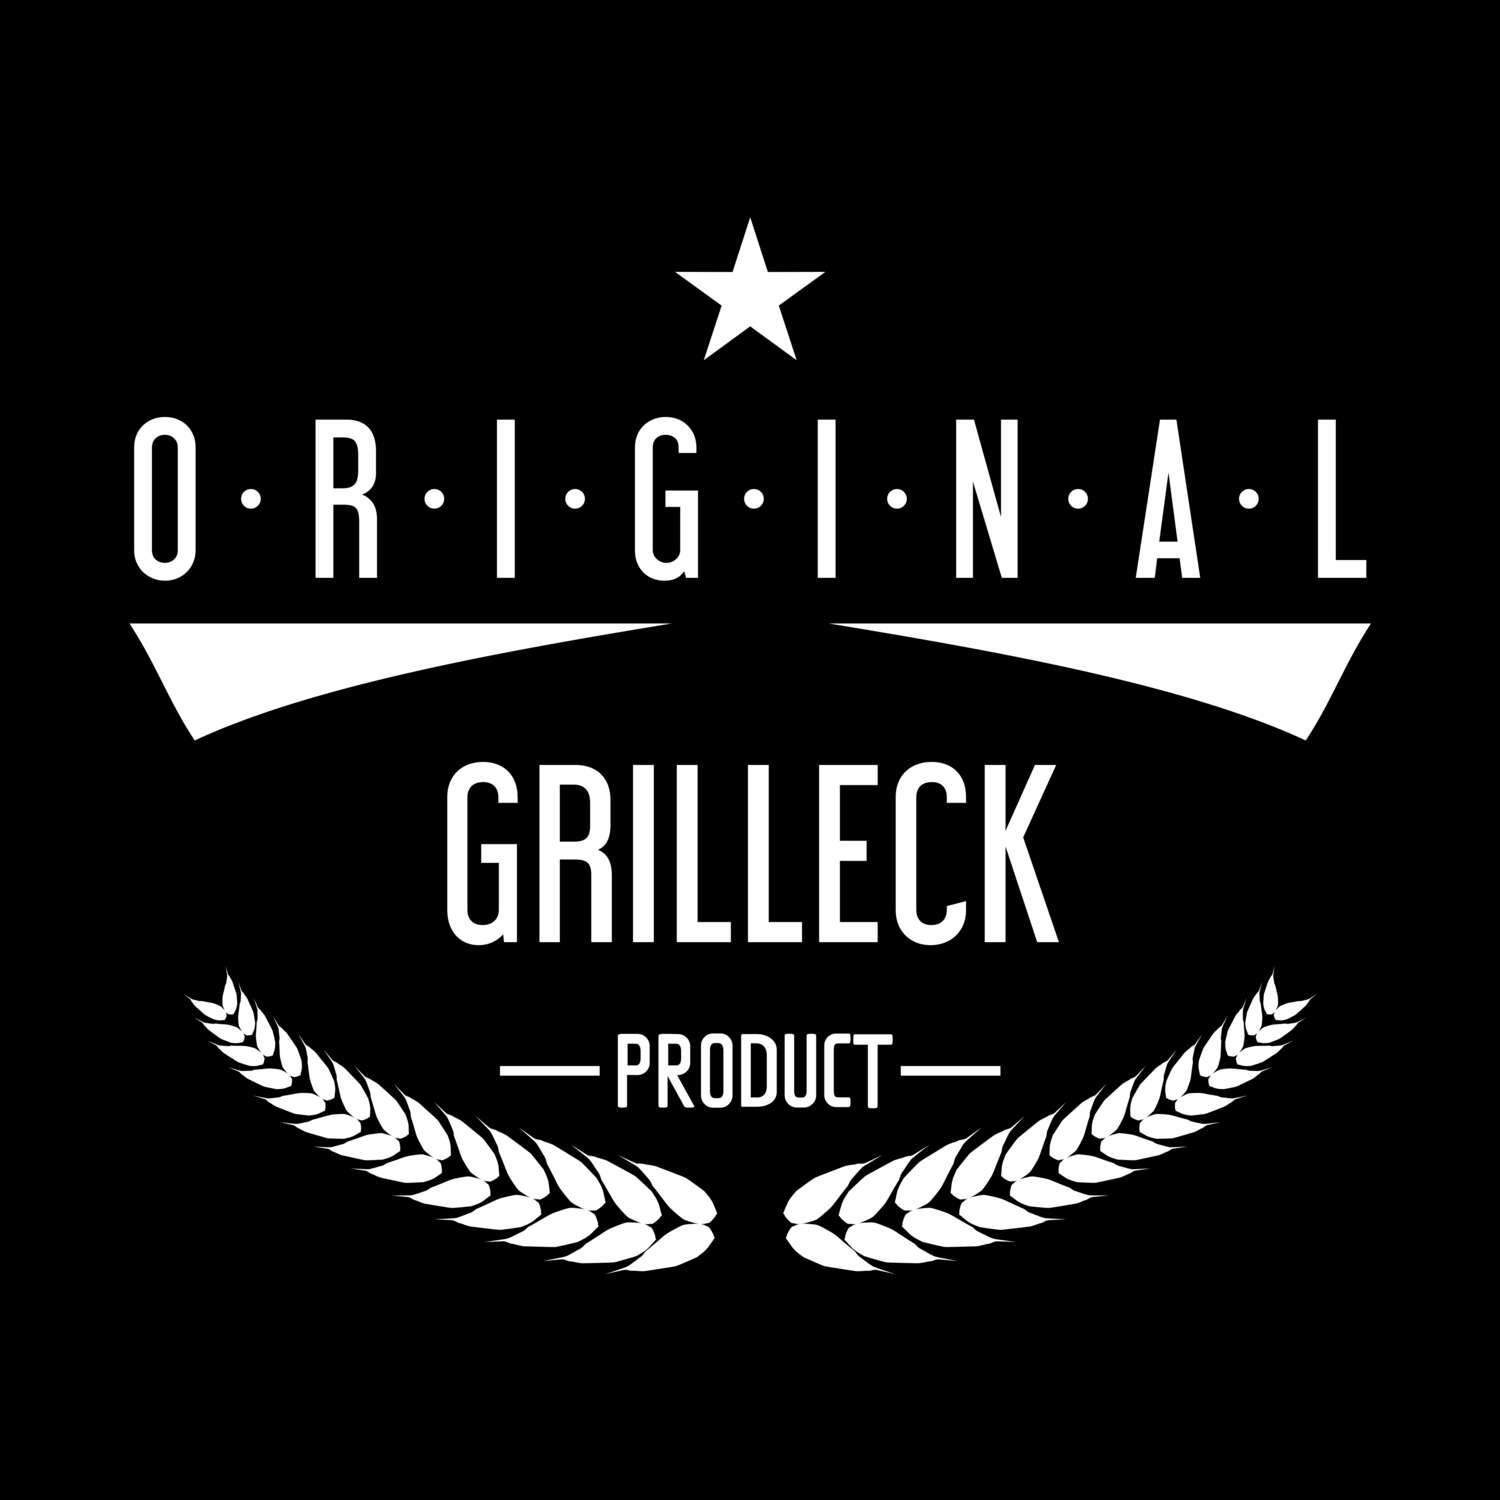 Grilleck T-Shirt »Original Product«